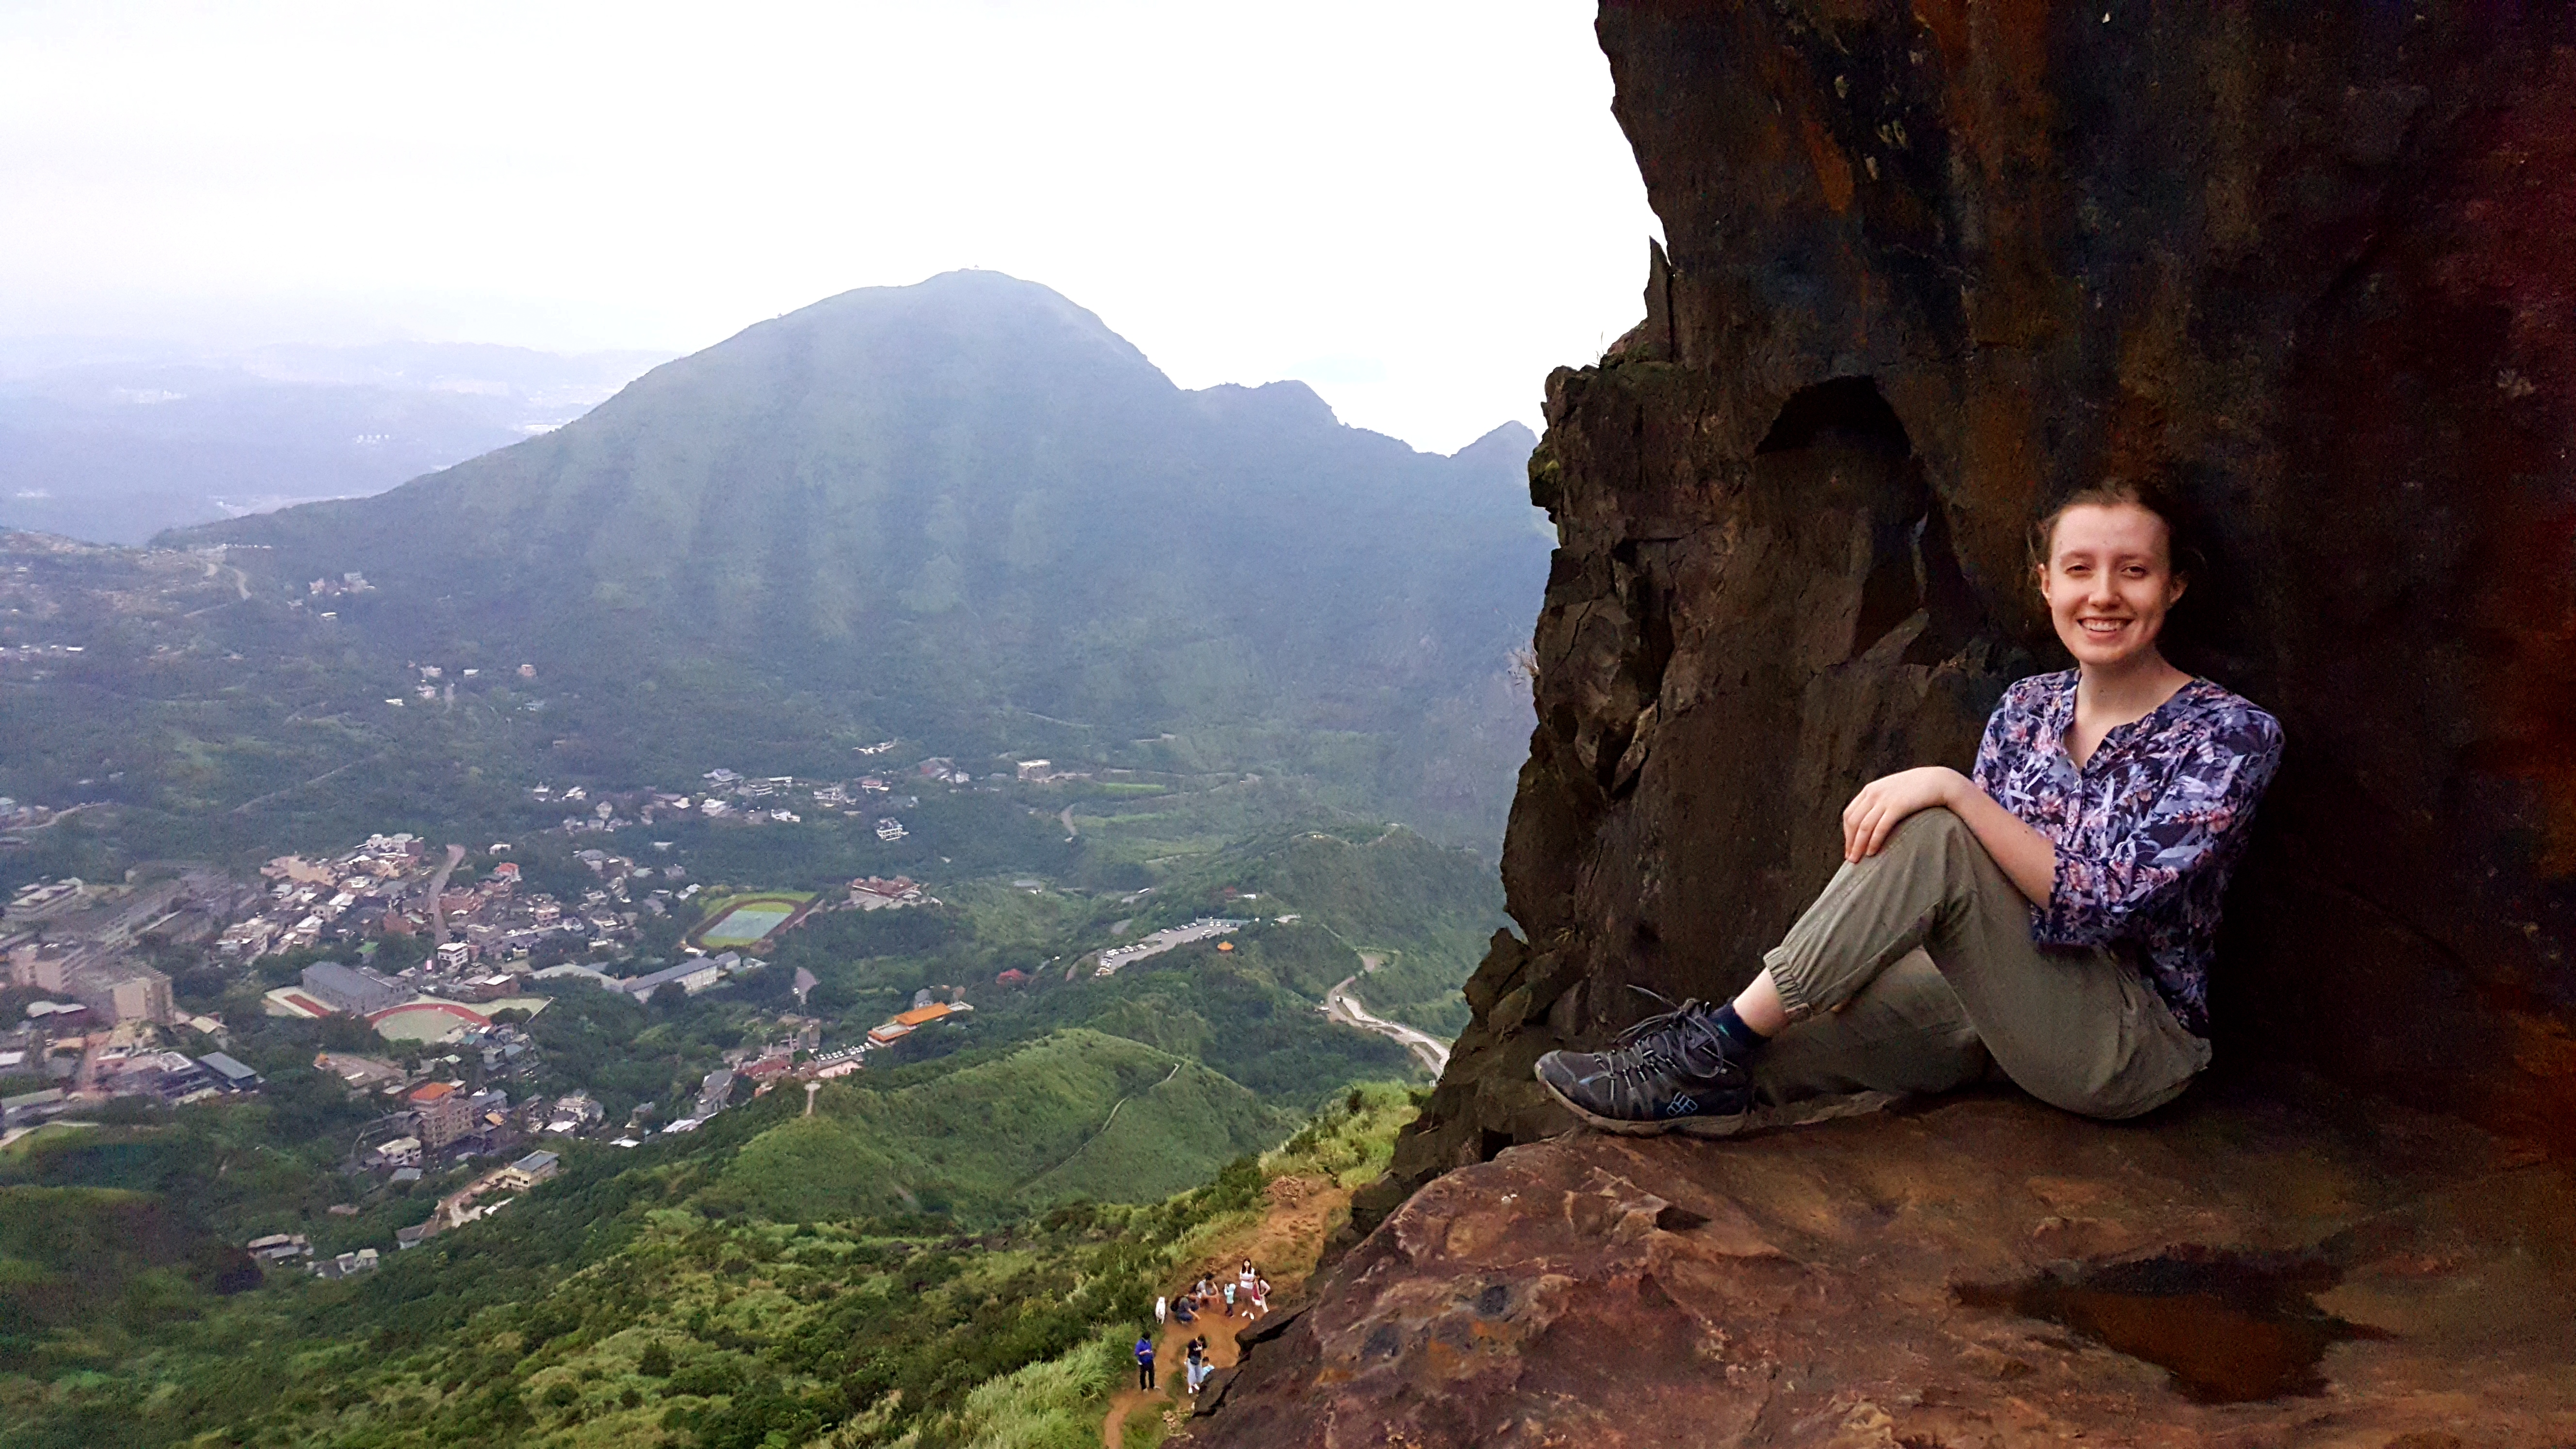 Enjoying the view after hiking Teapot Mountain (無耳茶壺山) in northern Taiwan.